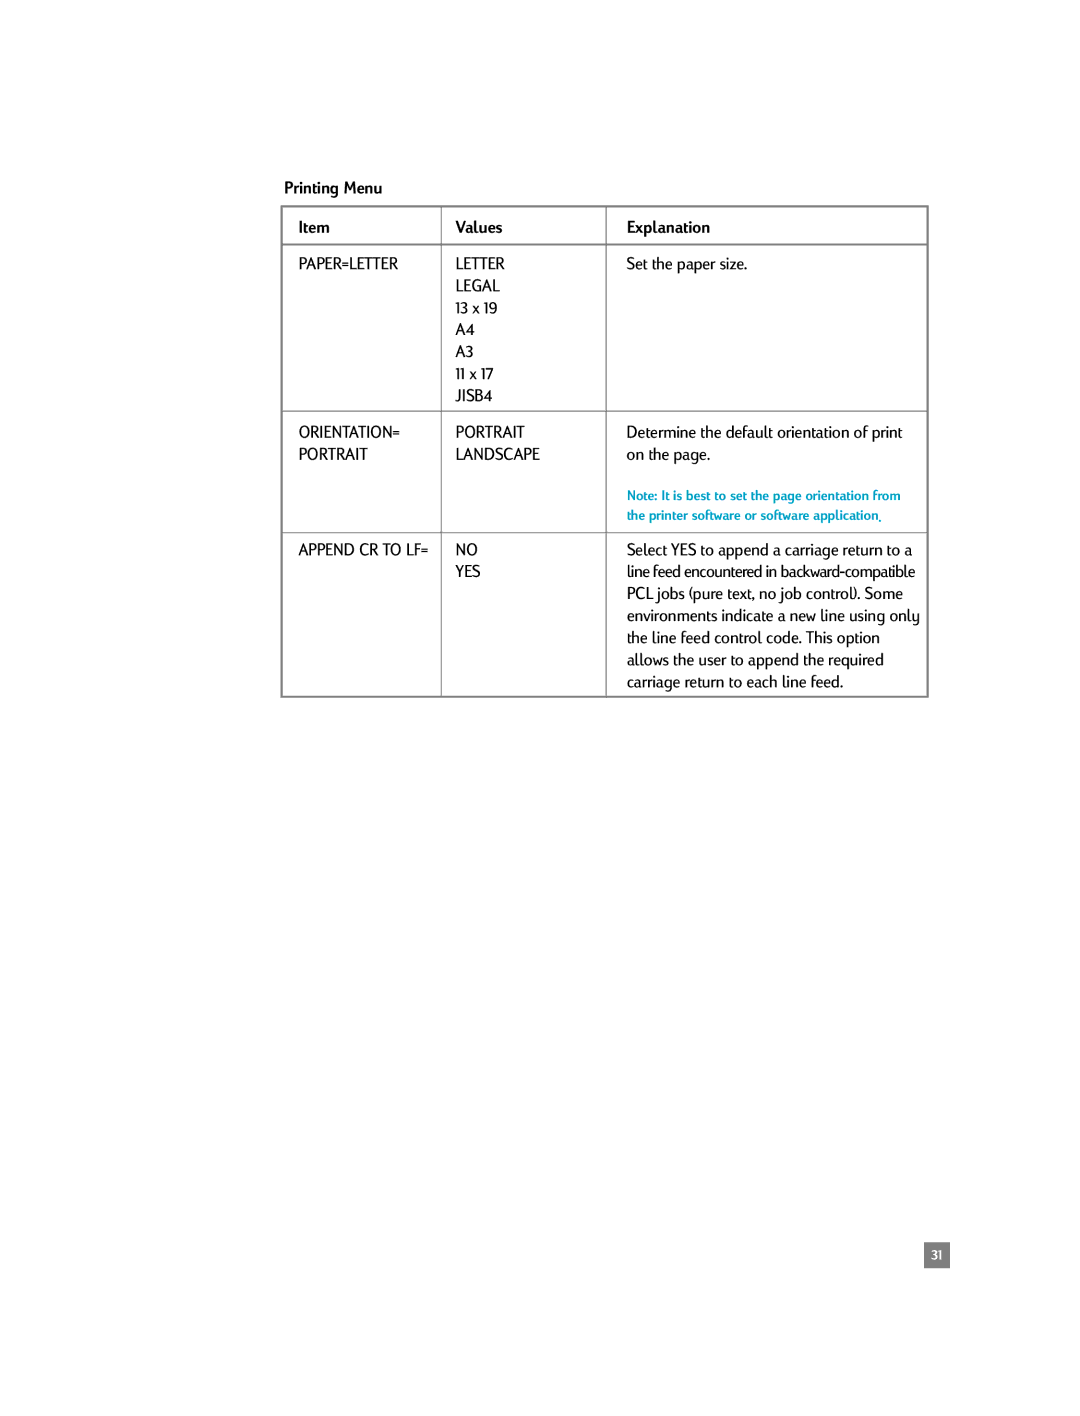 HP 2500C/CM manual Printing Menu Values Explanation 